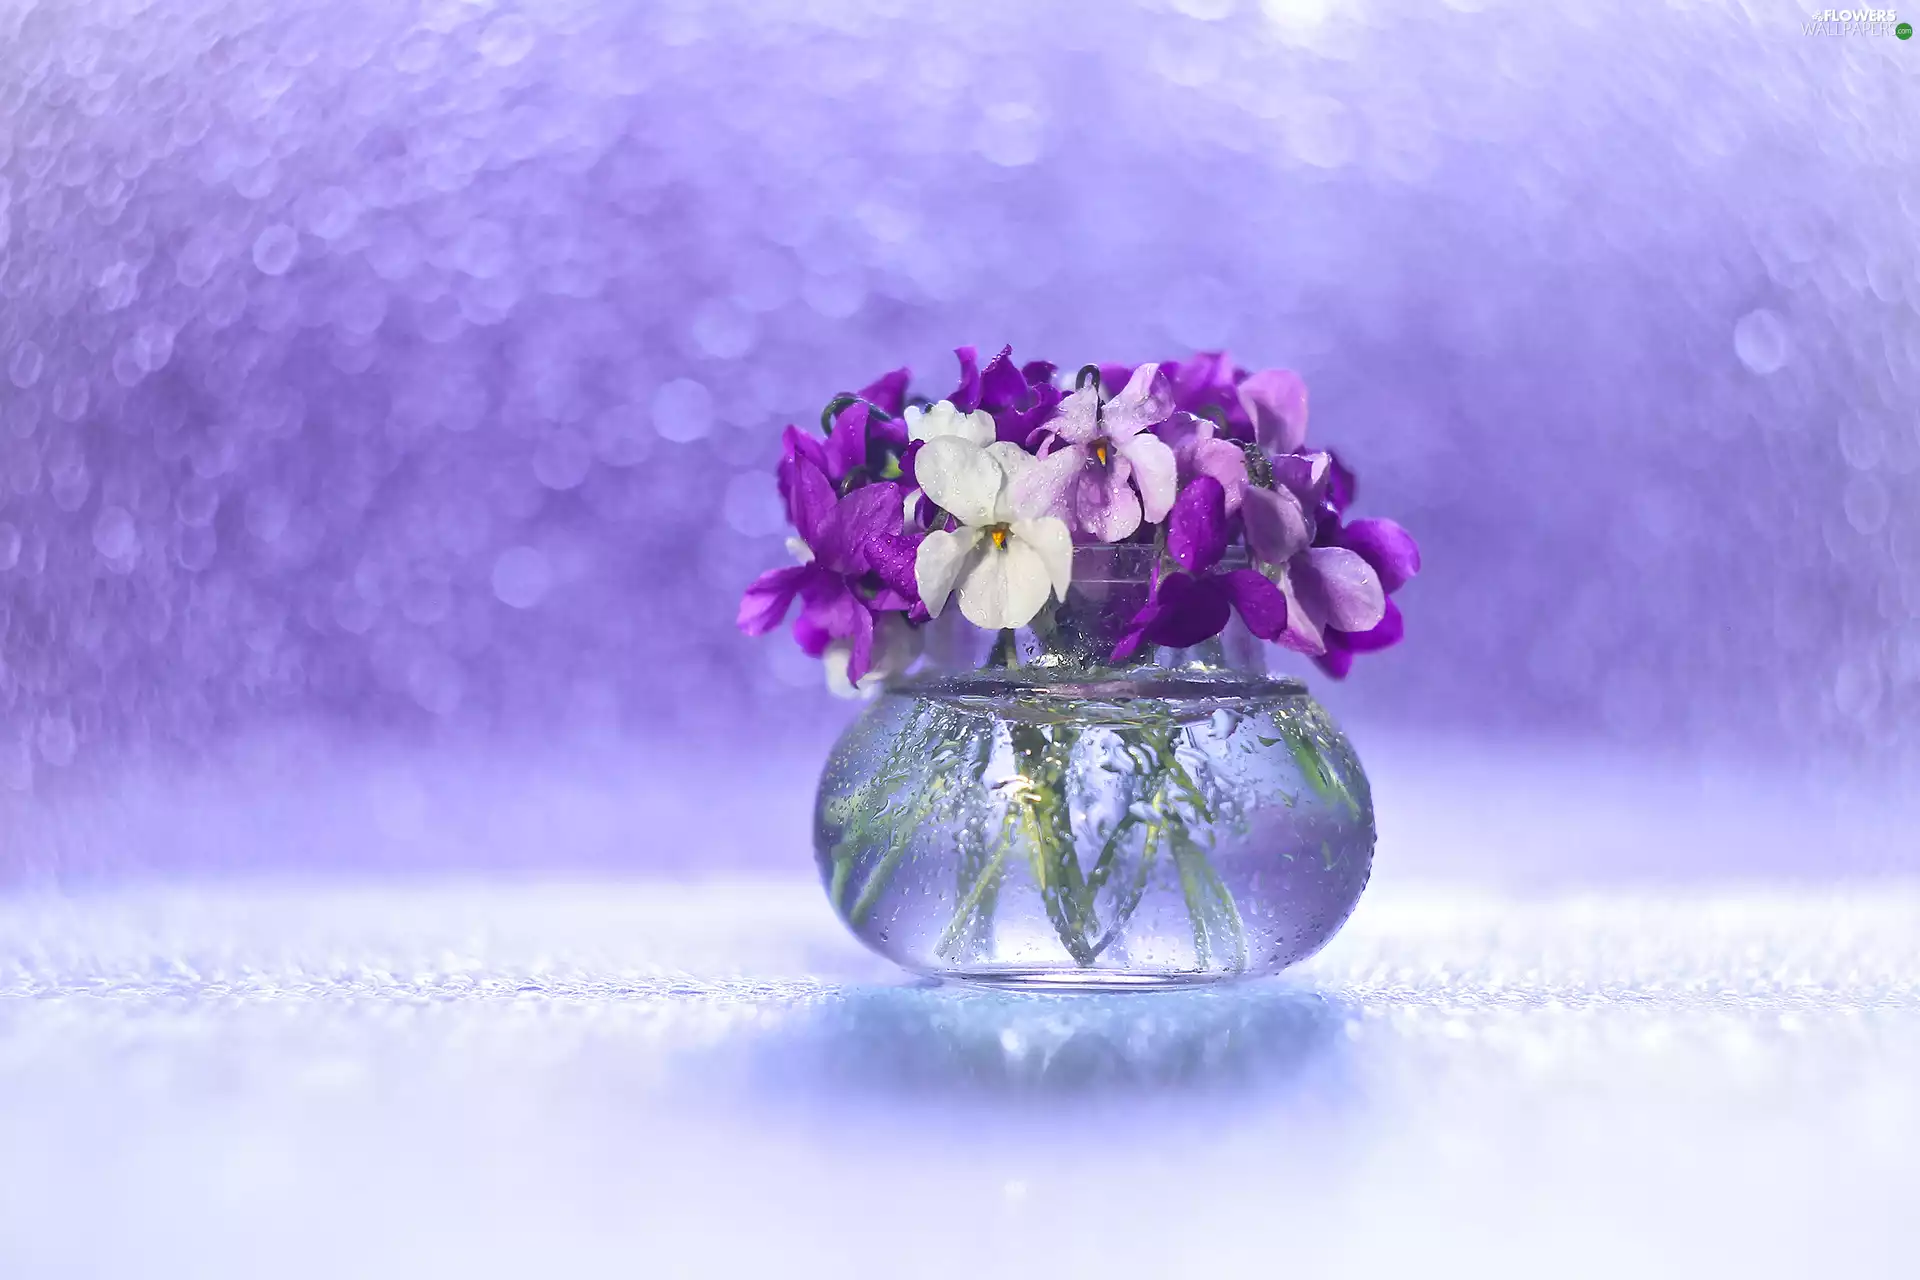 White, fragrant violets, Bokeh, decoration, vase, purple